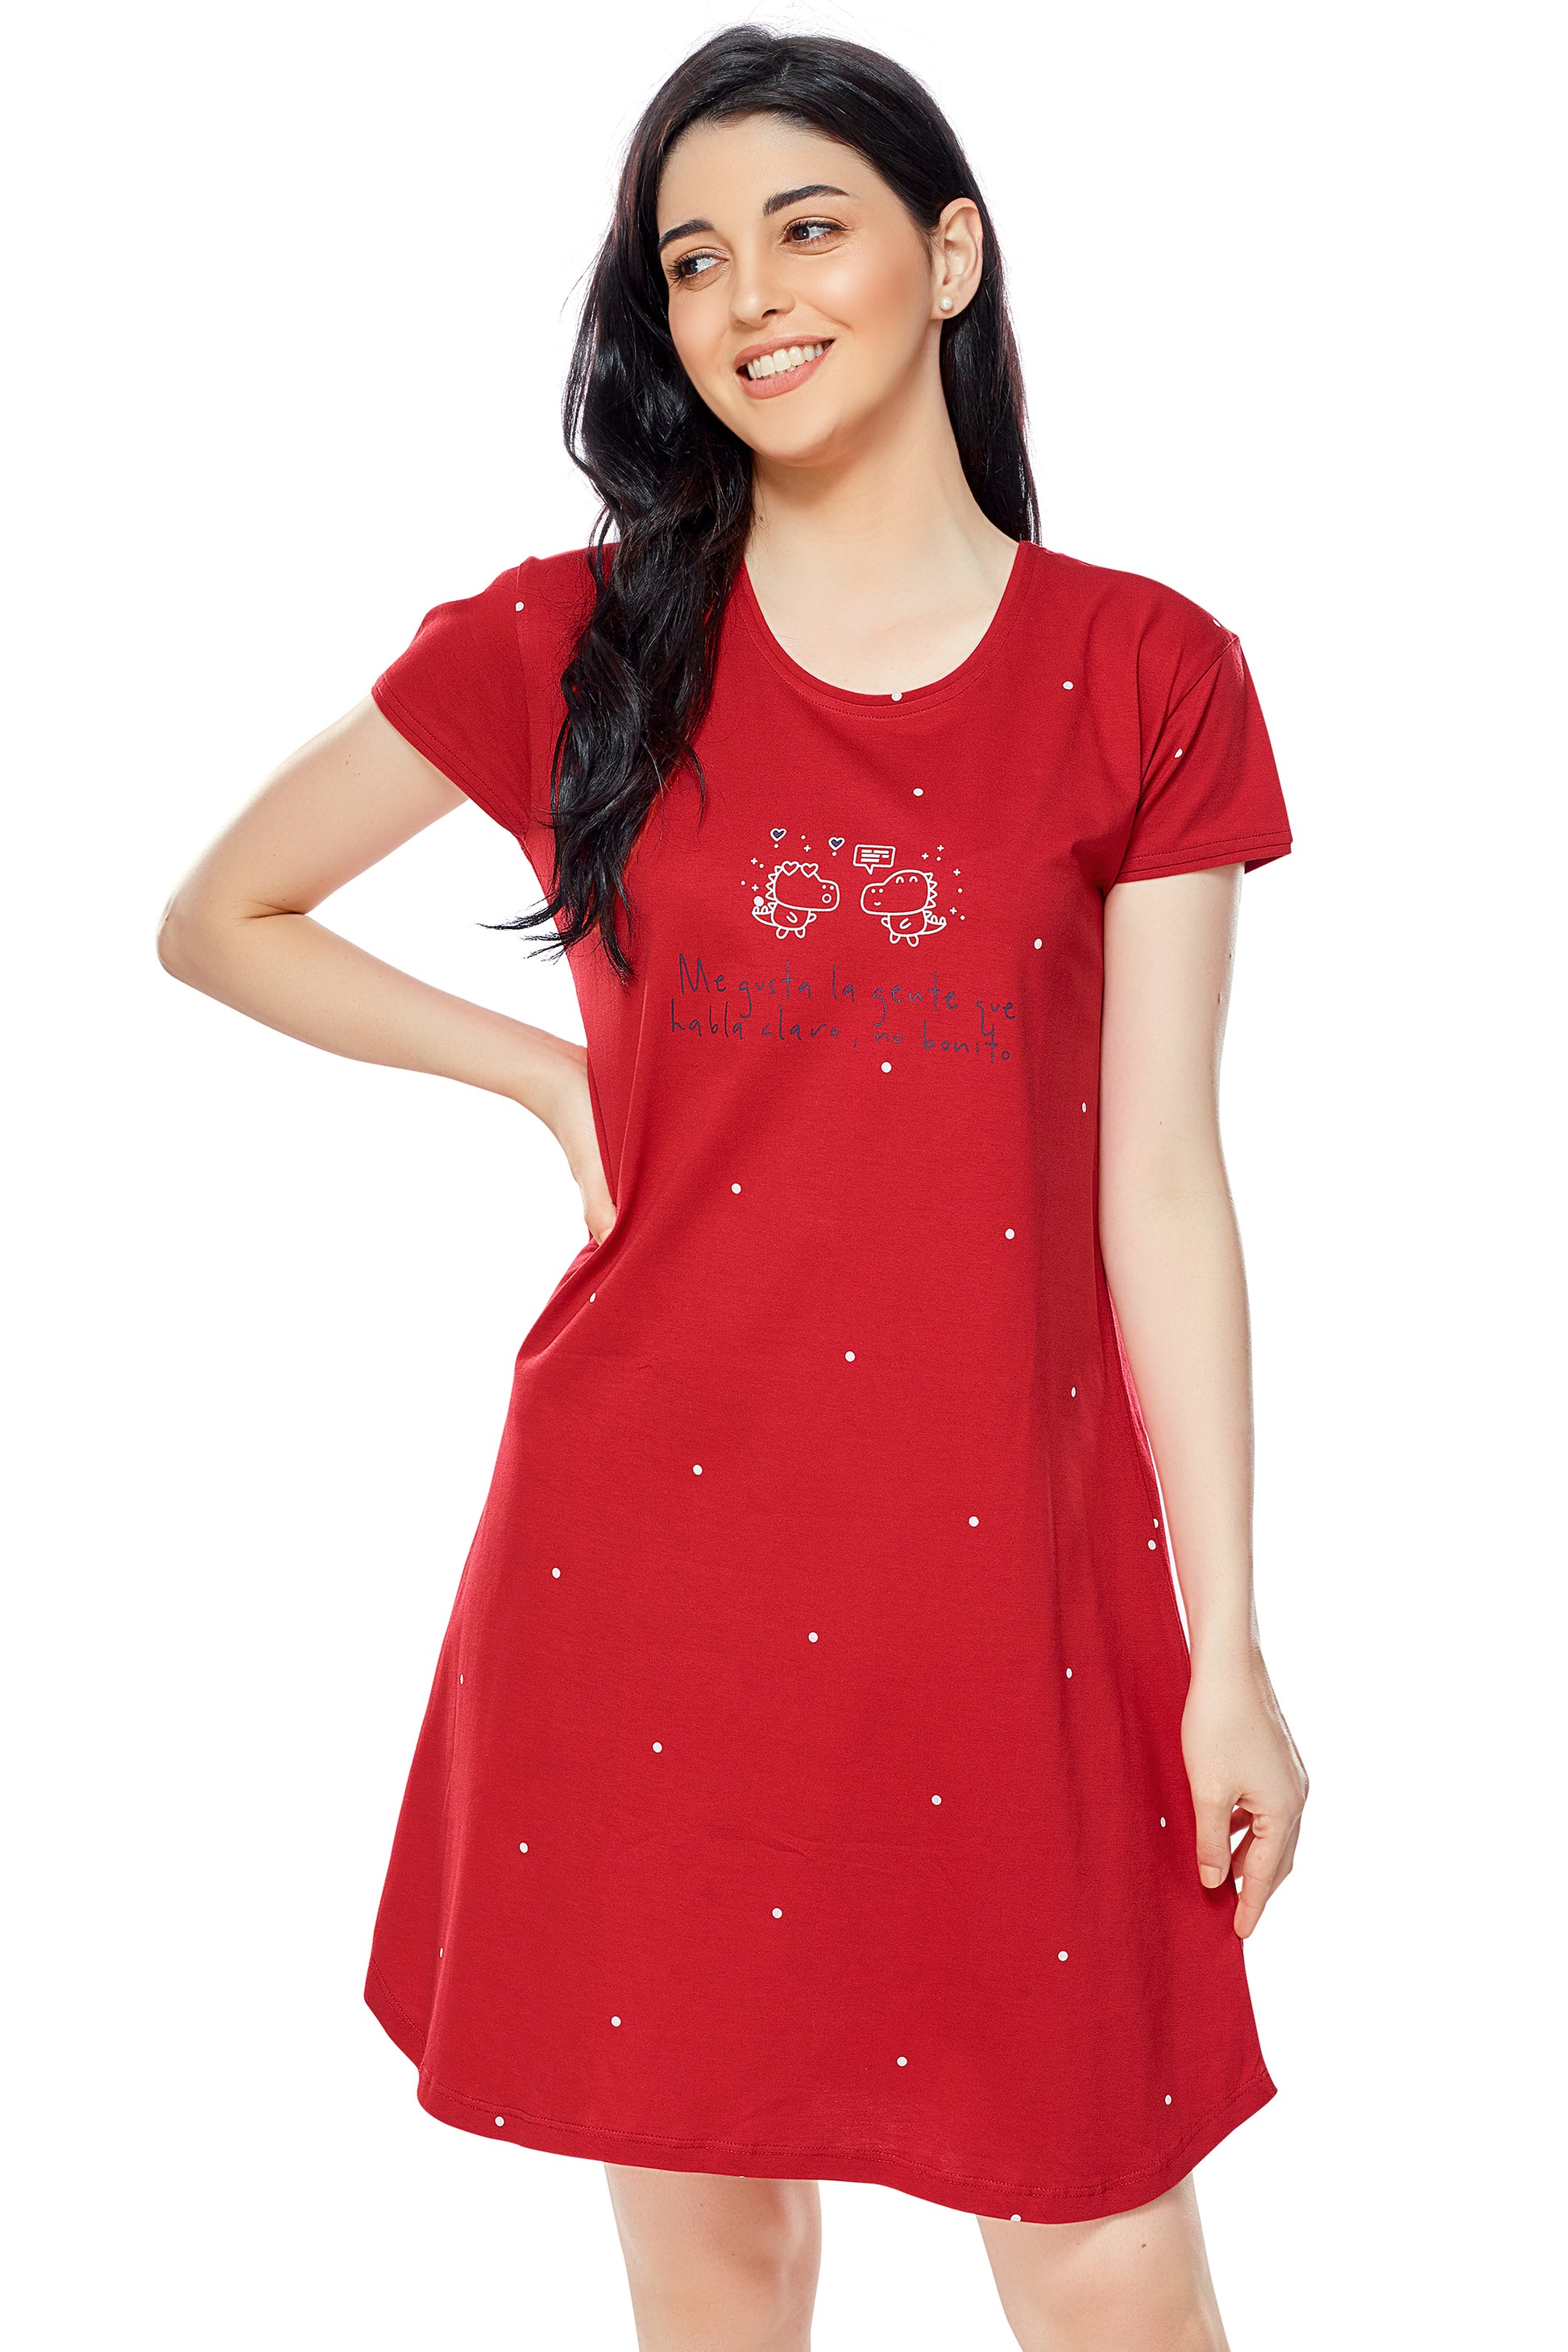 ZEYO Women Cotton Night Dress Red Dot Print Short Nighty